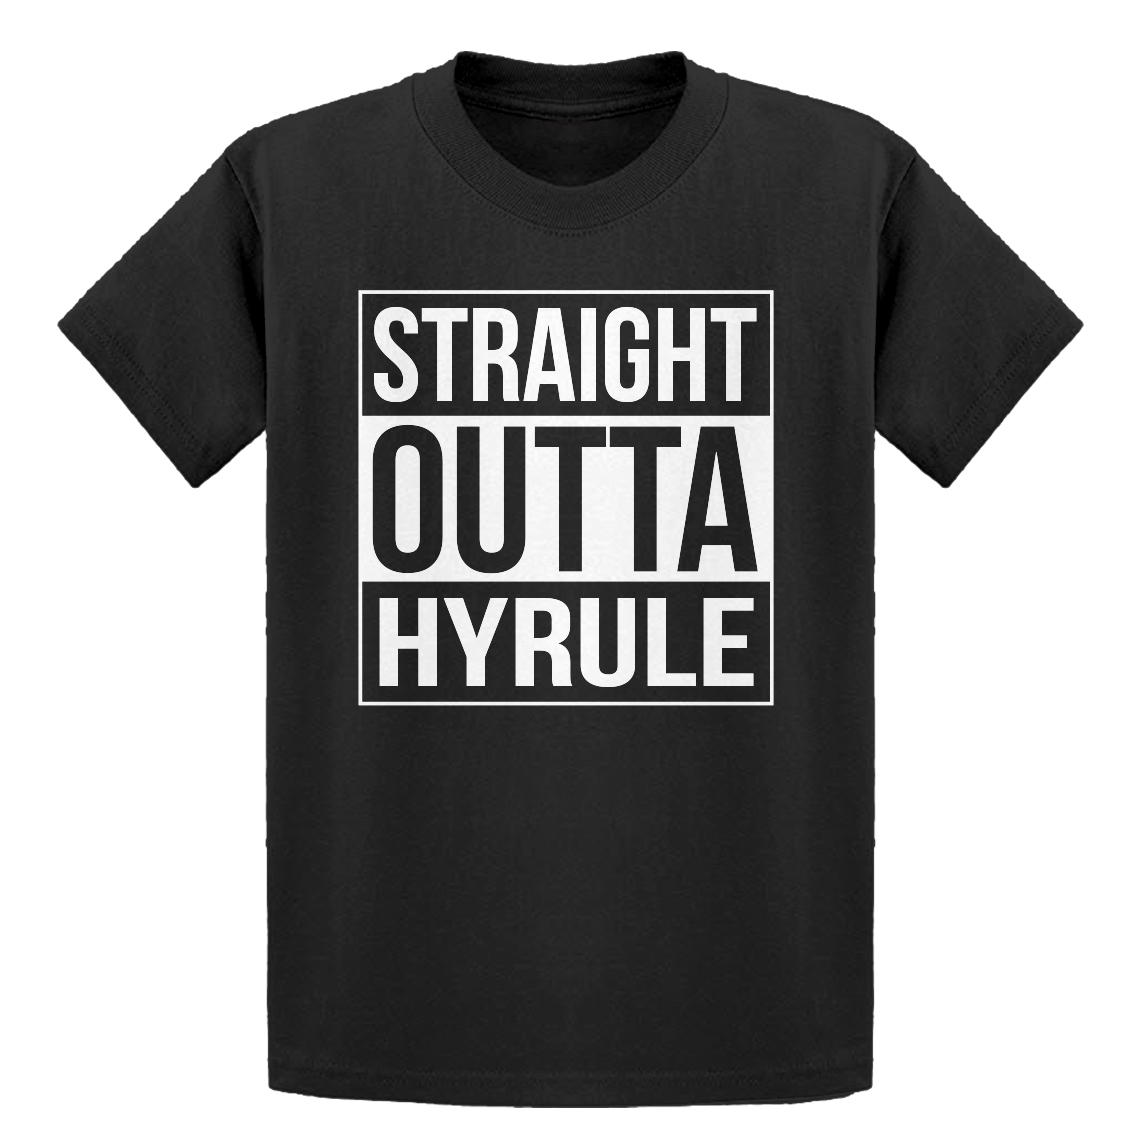 Straight Outta USA Wrestling Unisex Youths Short Sleeve T-Shirt Kids T-Shirt Tops Black